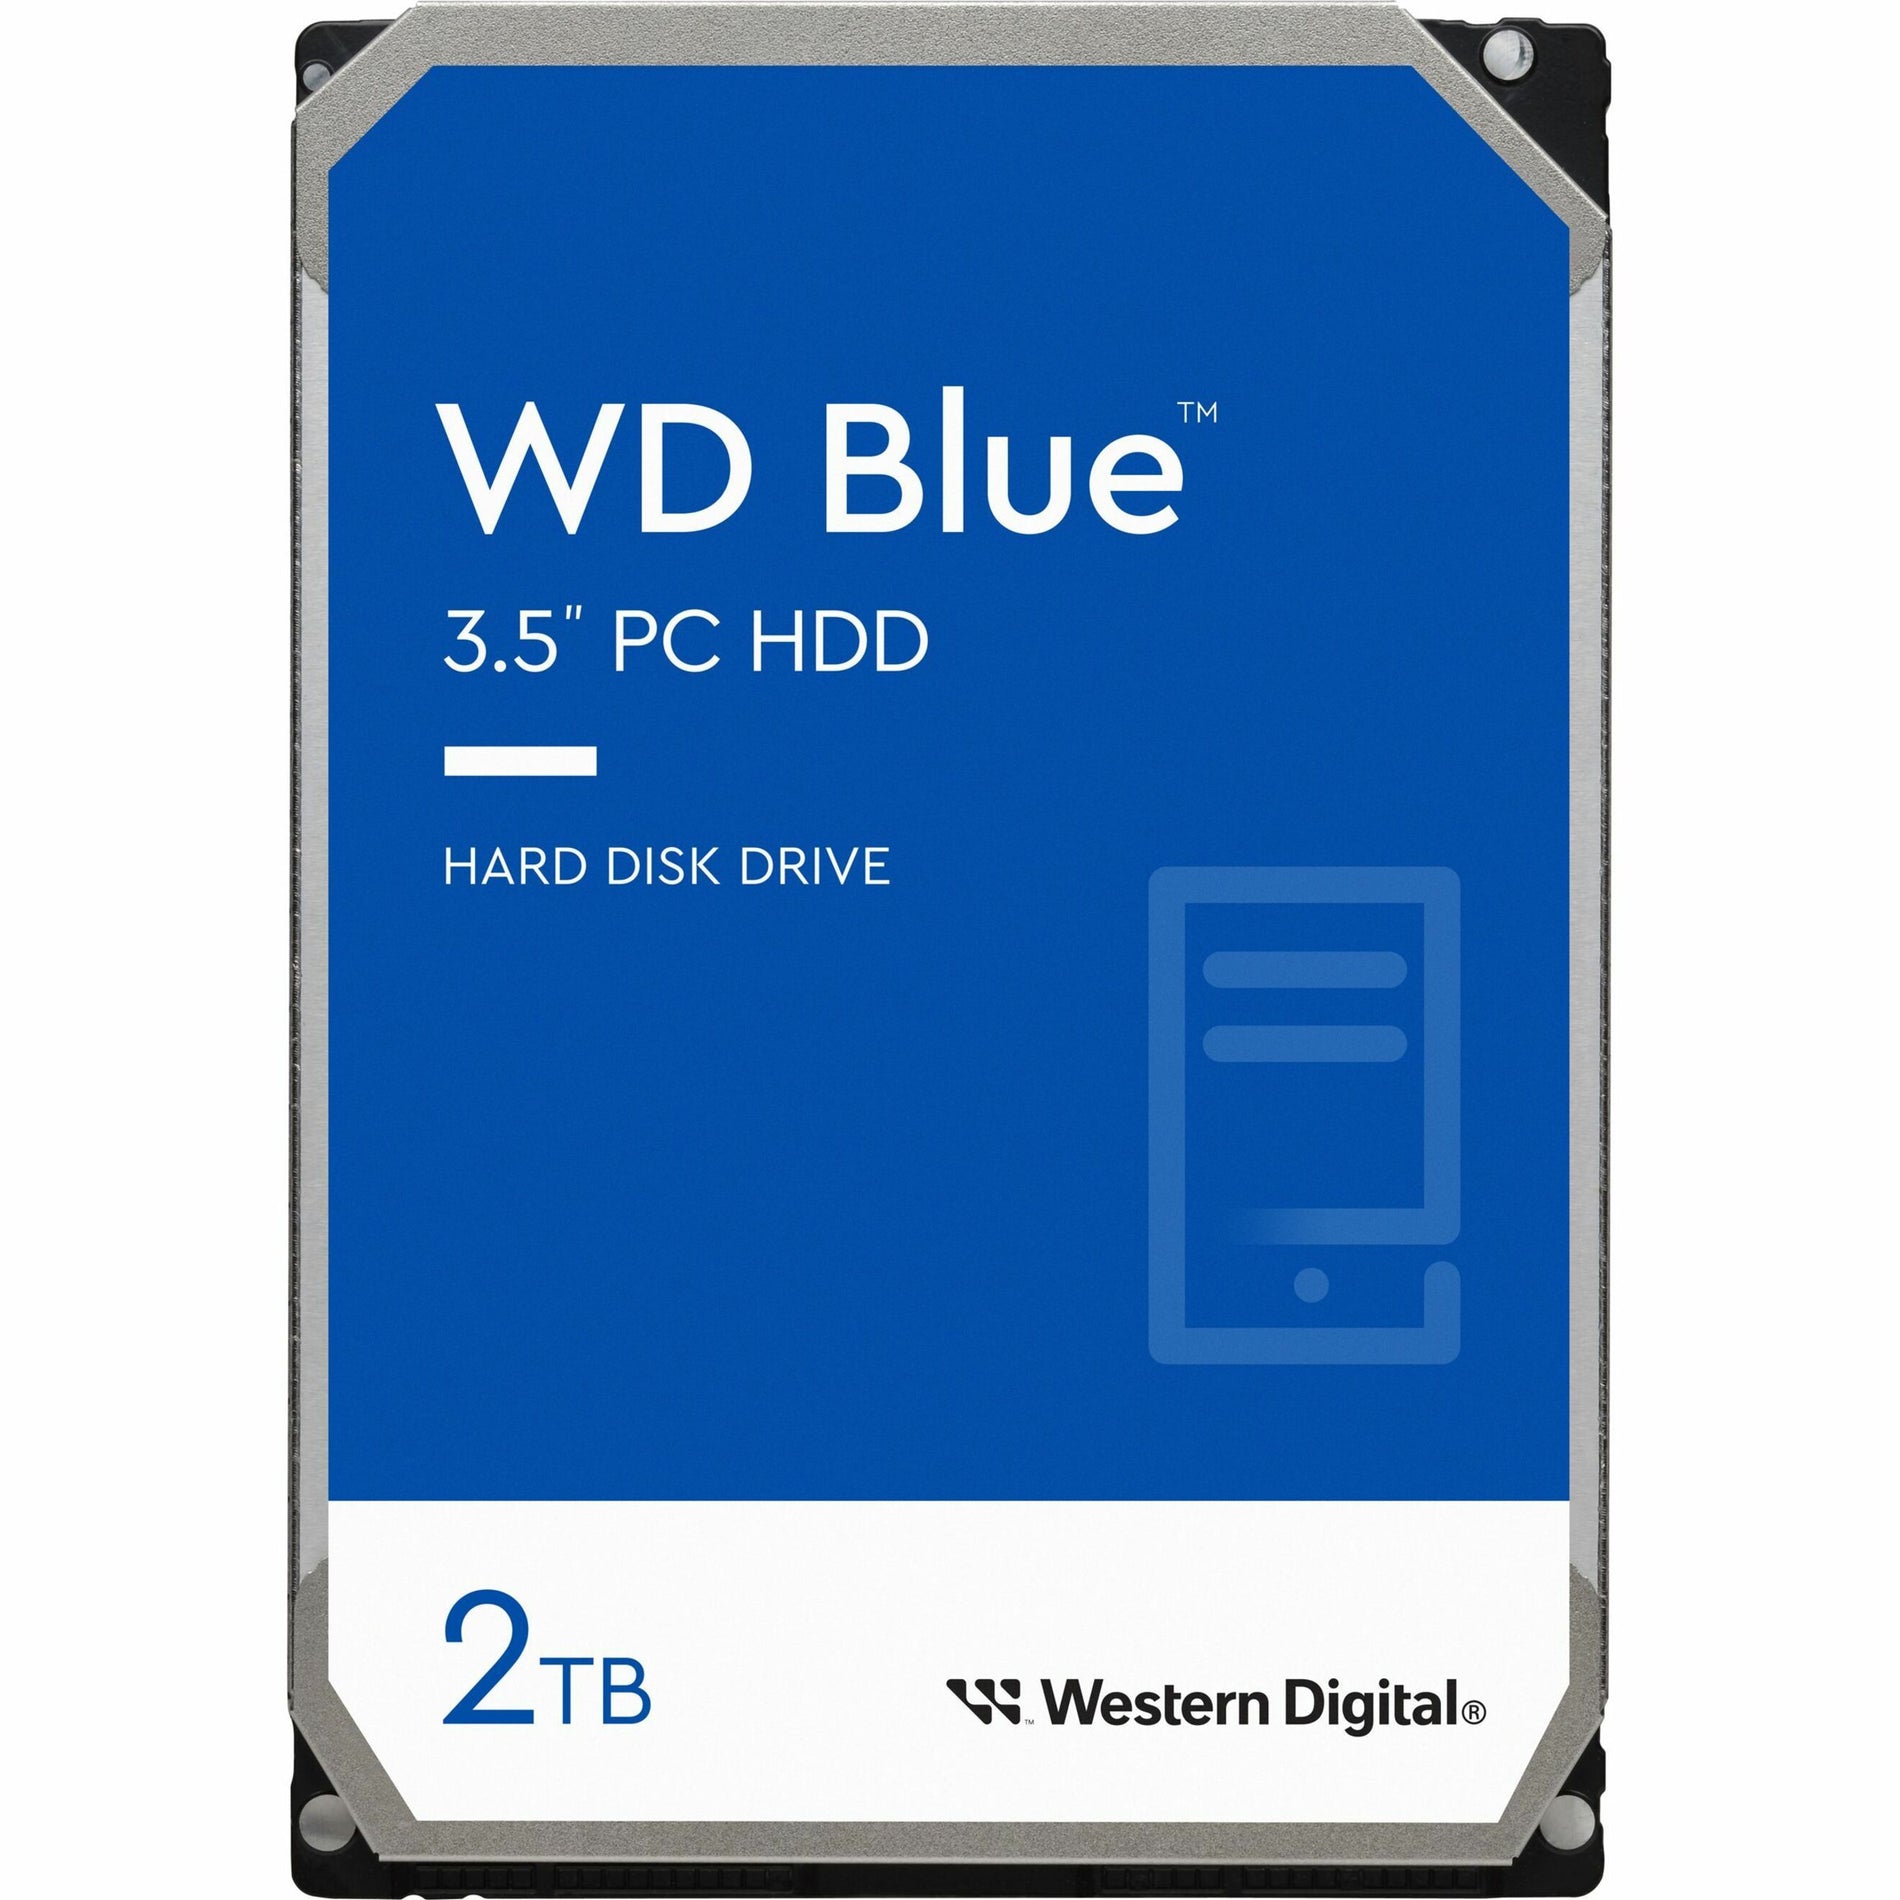 WD WD20EARZ Blue 3.5-inch SATA PC HDD, 2TB Storage Capacity, 5400 RPM, 64MB Buffer